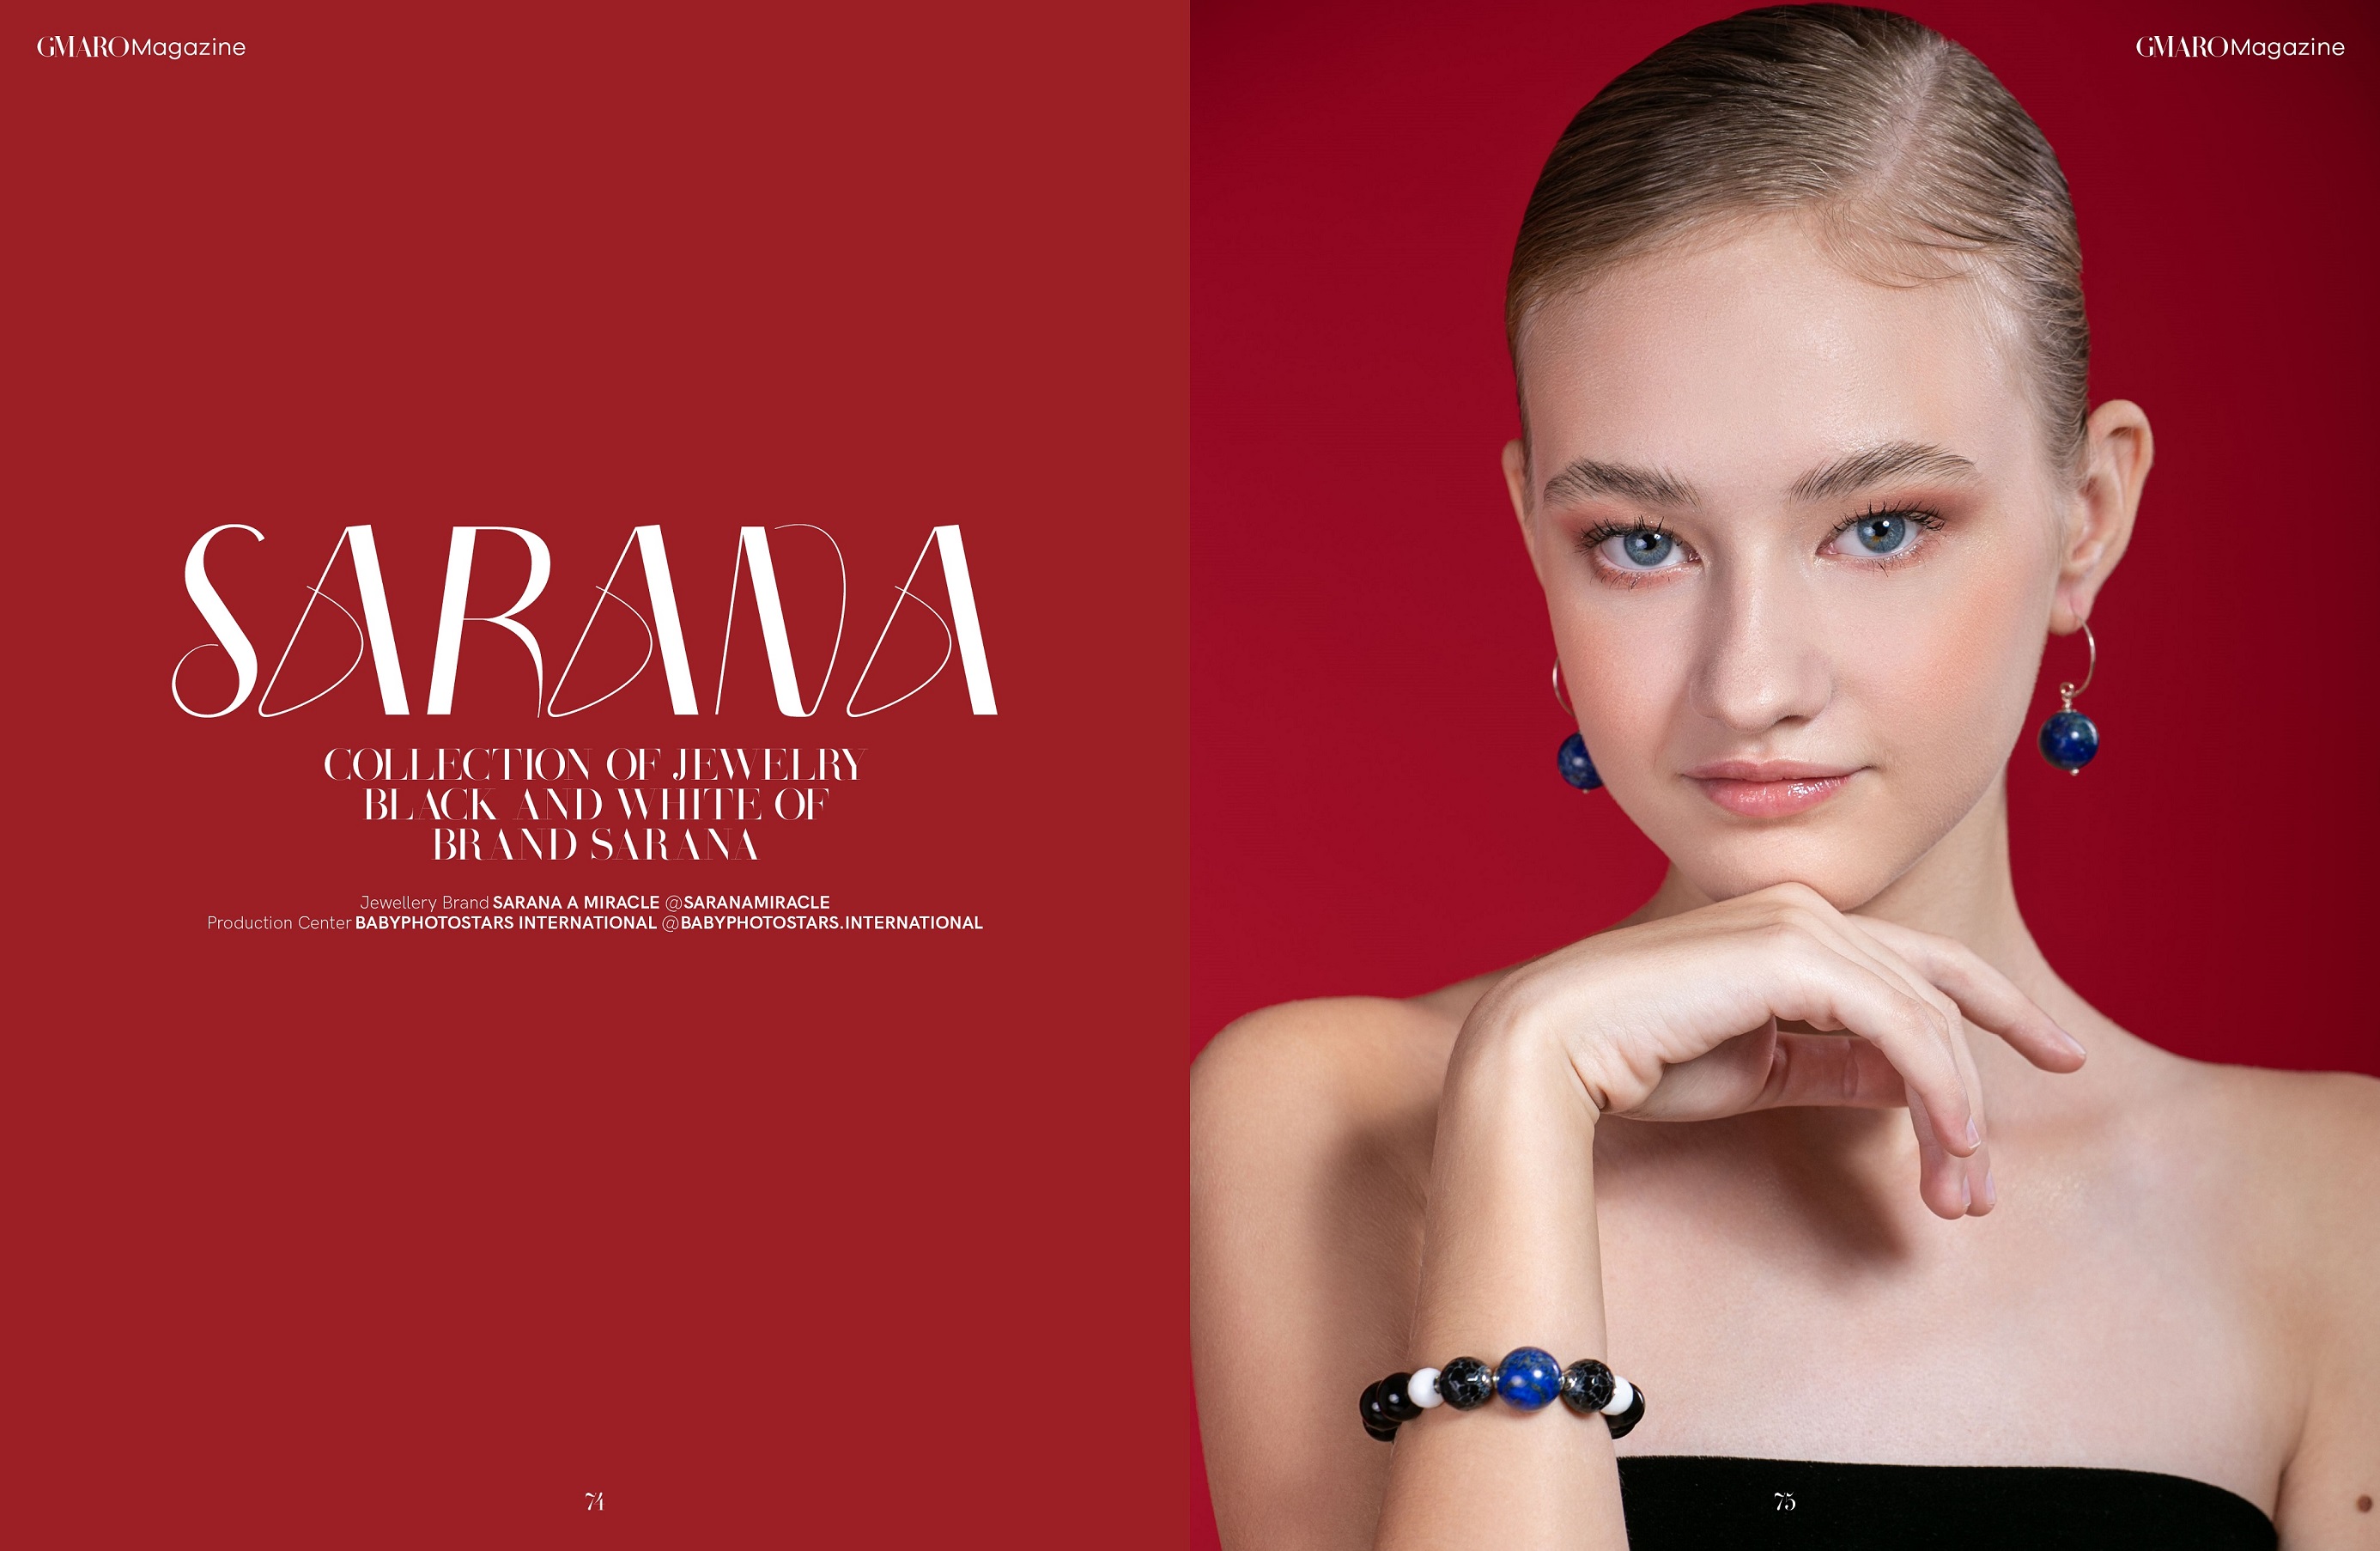 Extraordinary jewelry of the Spanish brand SARANA